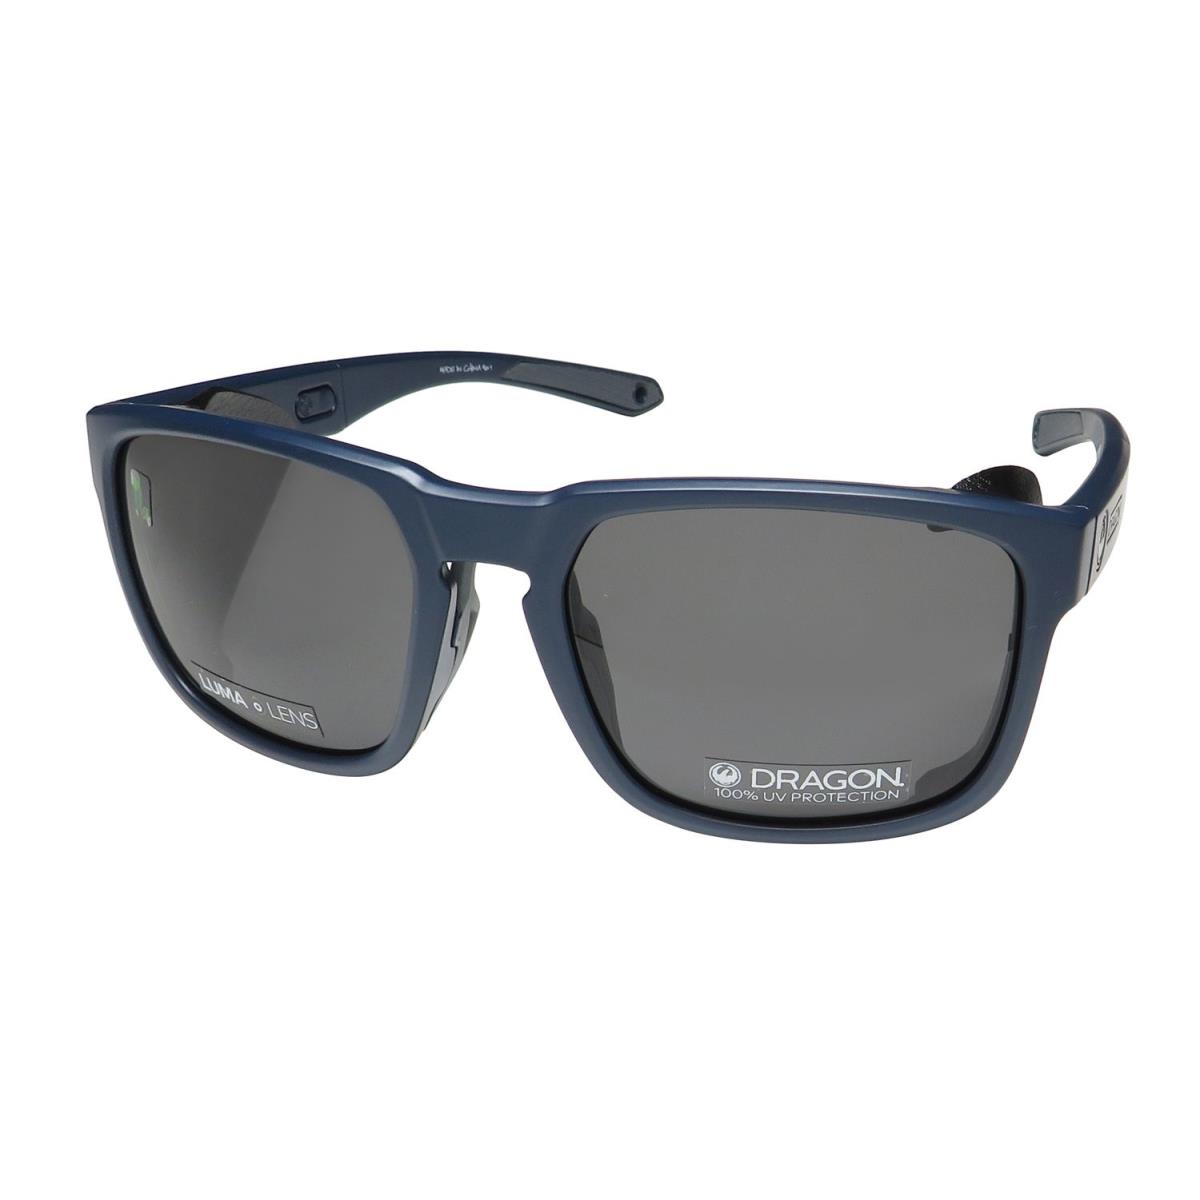 Dragon Latitude X LL Premium Sports Design UV Rays Protection Sunglasses Matte Navy Blue